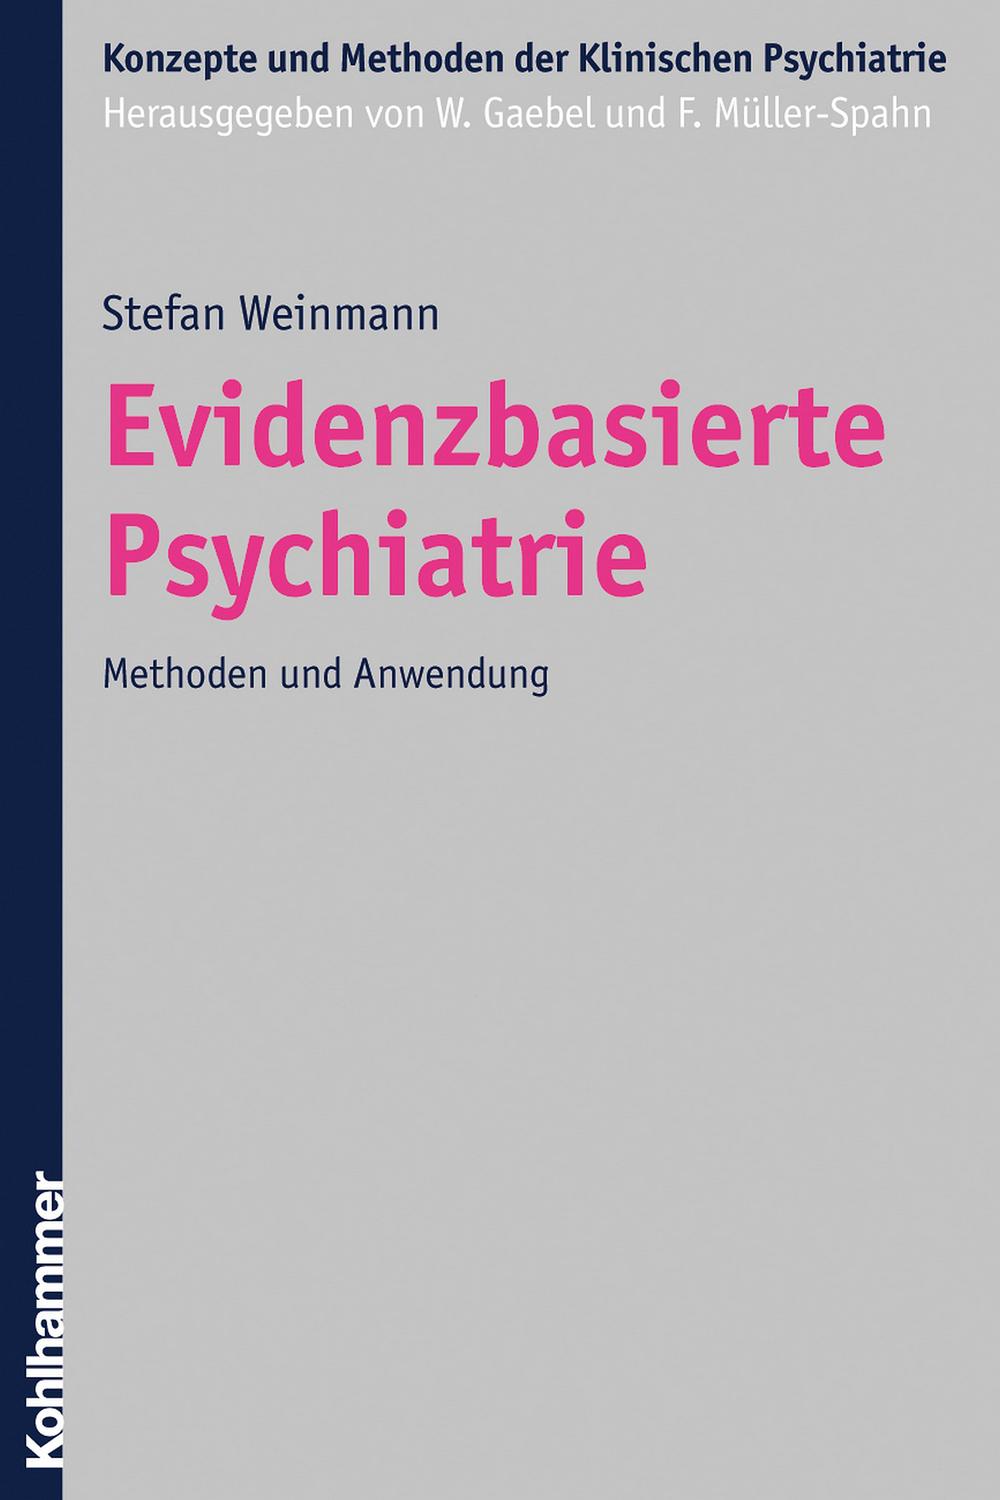 Evidenzbasierte Psychiatrie - Stefan Weinmann